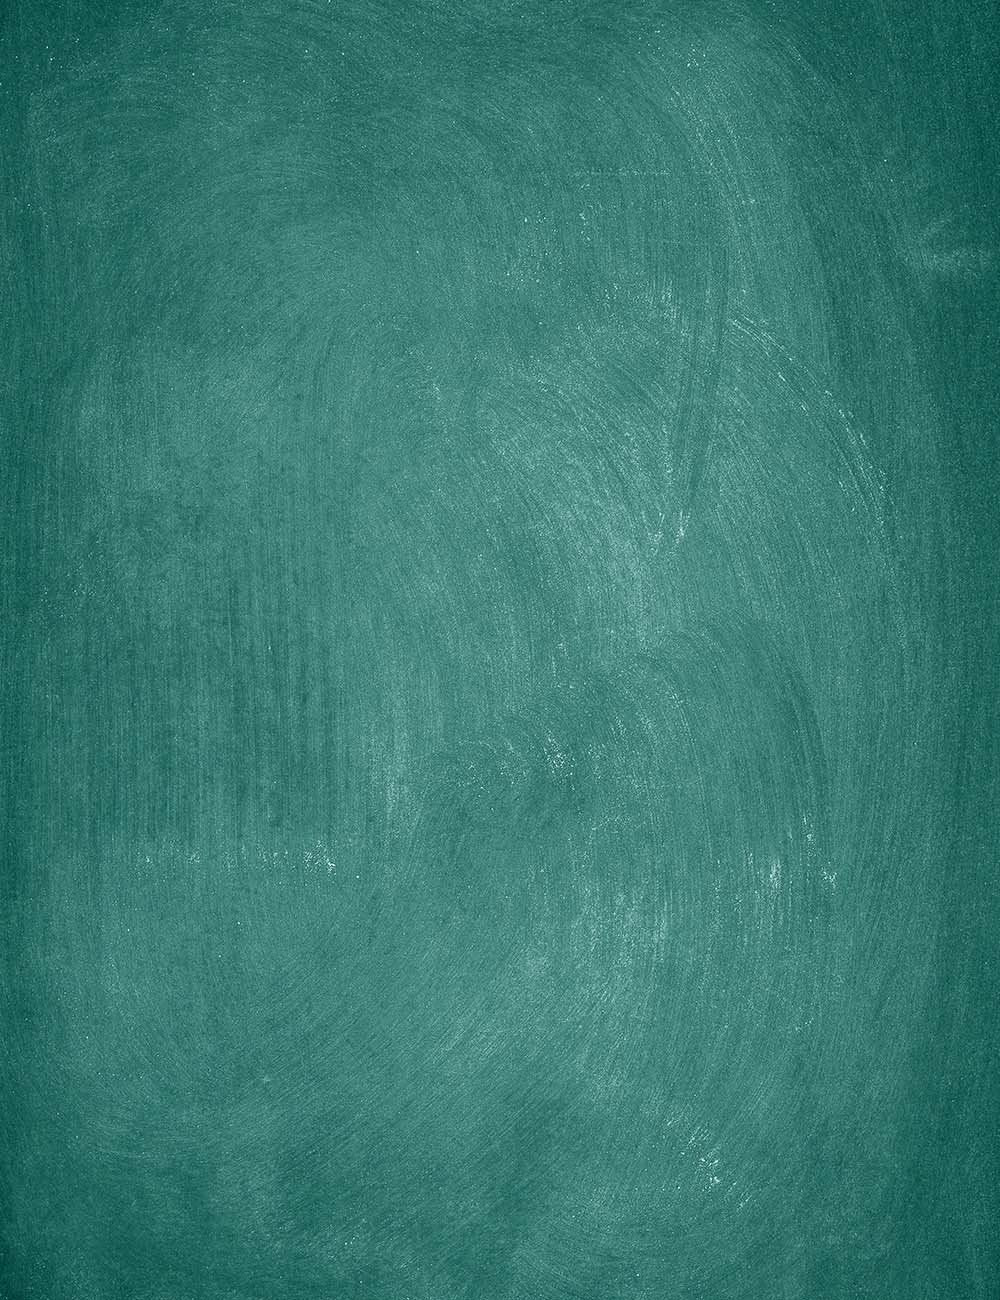 Green Chalkboard With Texture Photography Backdrop J-0735 Shopbackdrop